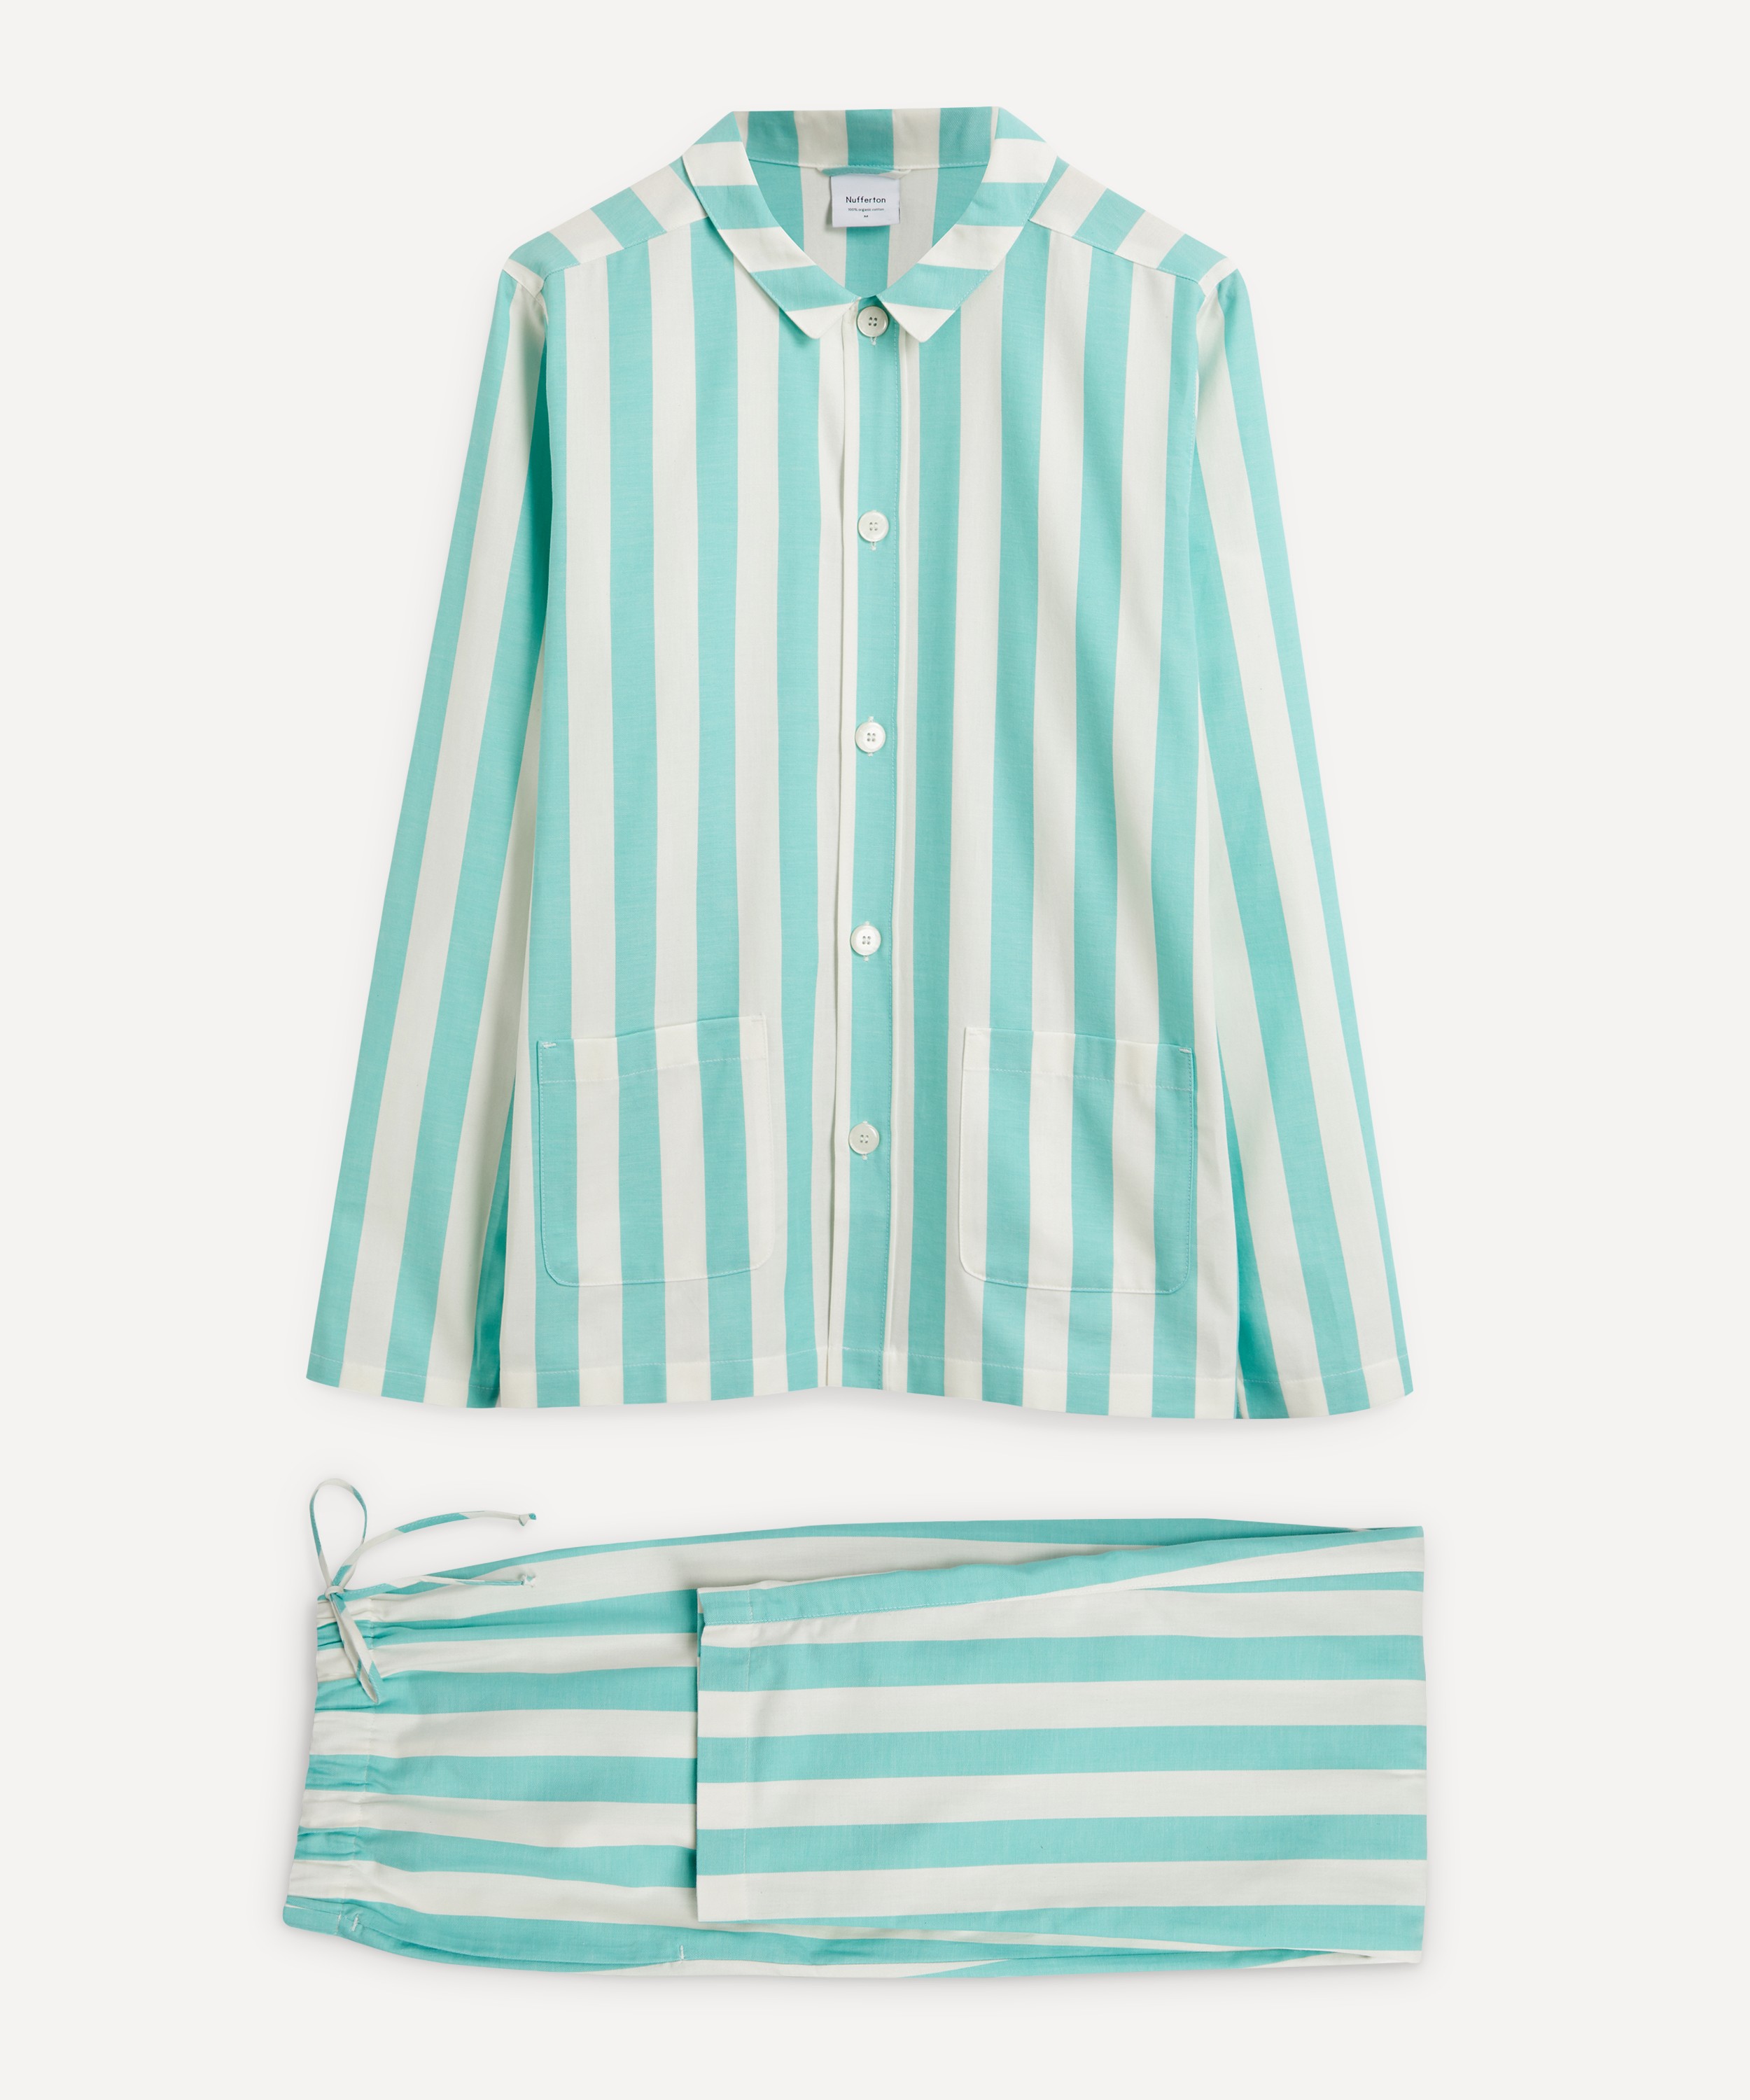 Nufferton Uno Turquoise and White Striped Pyjamas